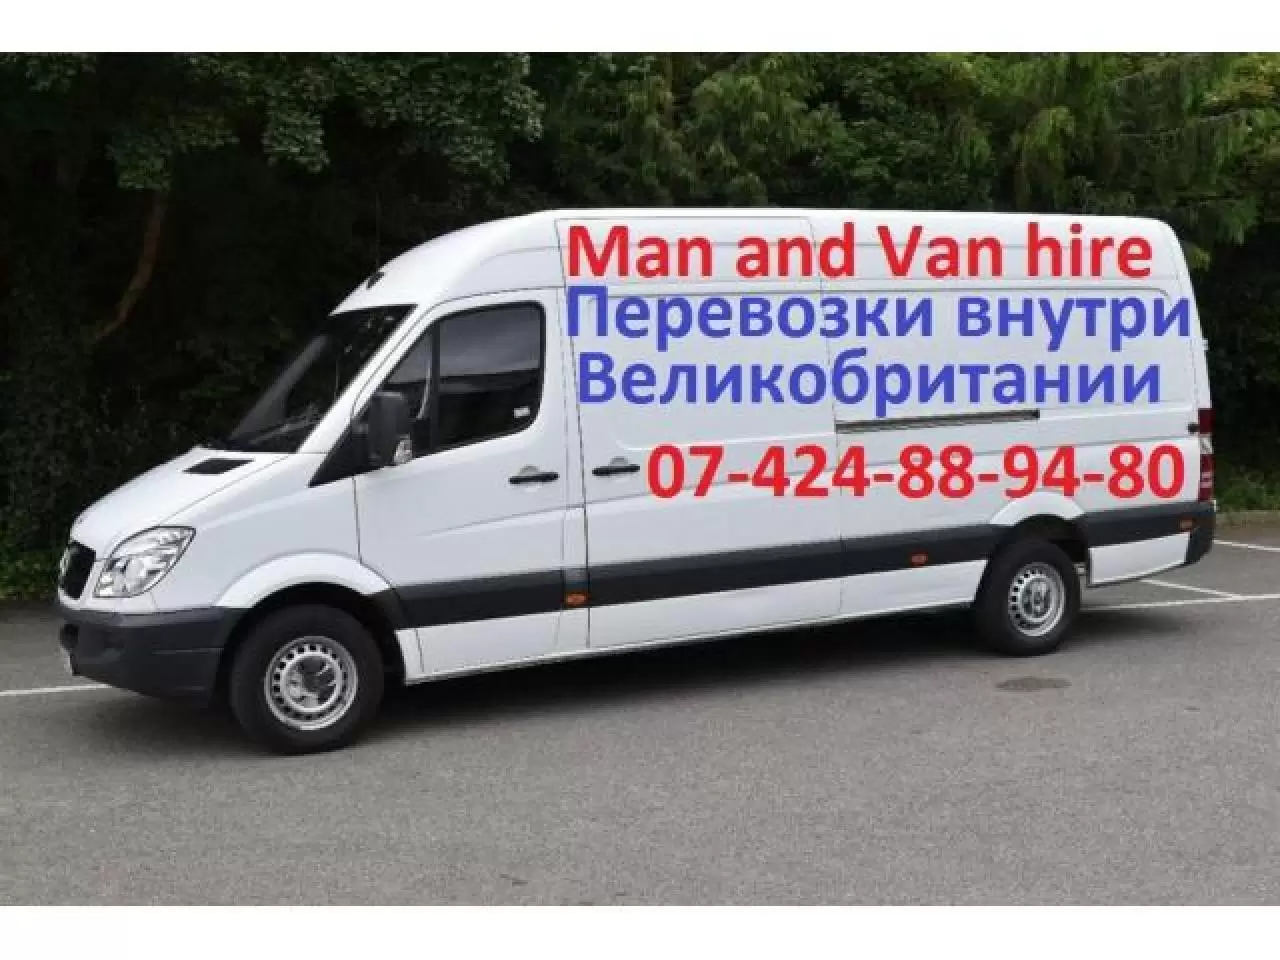 Man and Van hire - 1